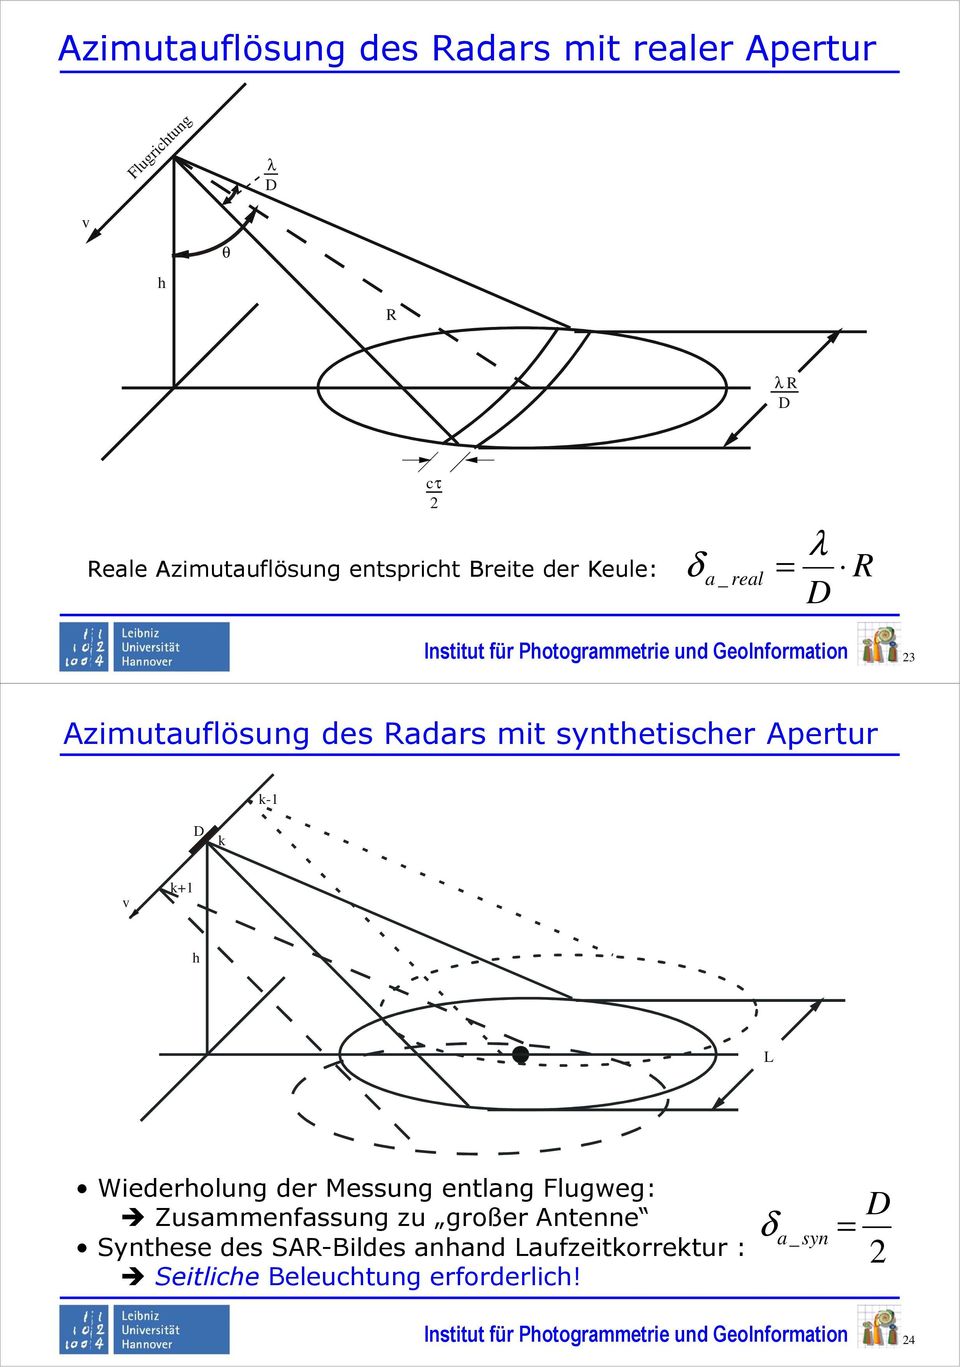 Apertur k-1 D k v k+1 h L Wiederholung der Messung entlang Flugweg: Zusammenfassung zu großer Antenne